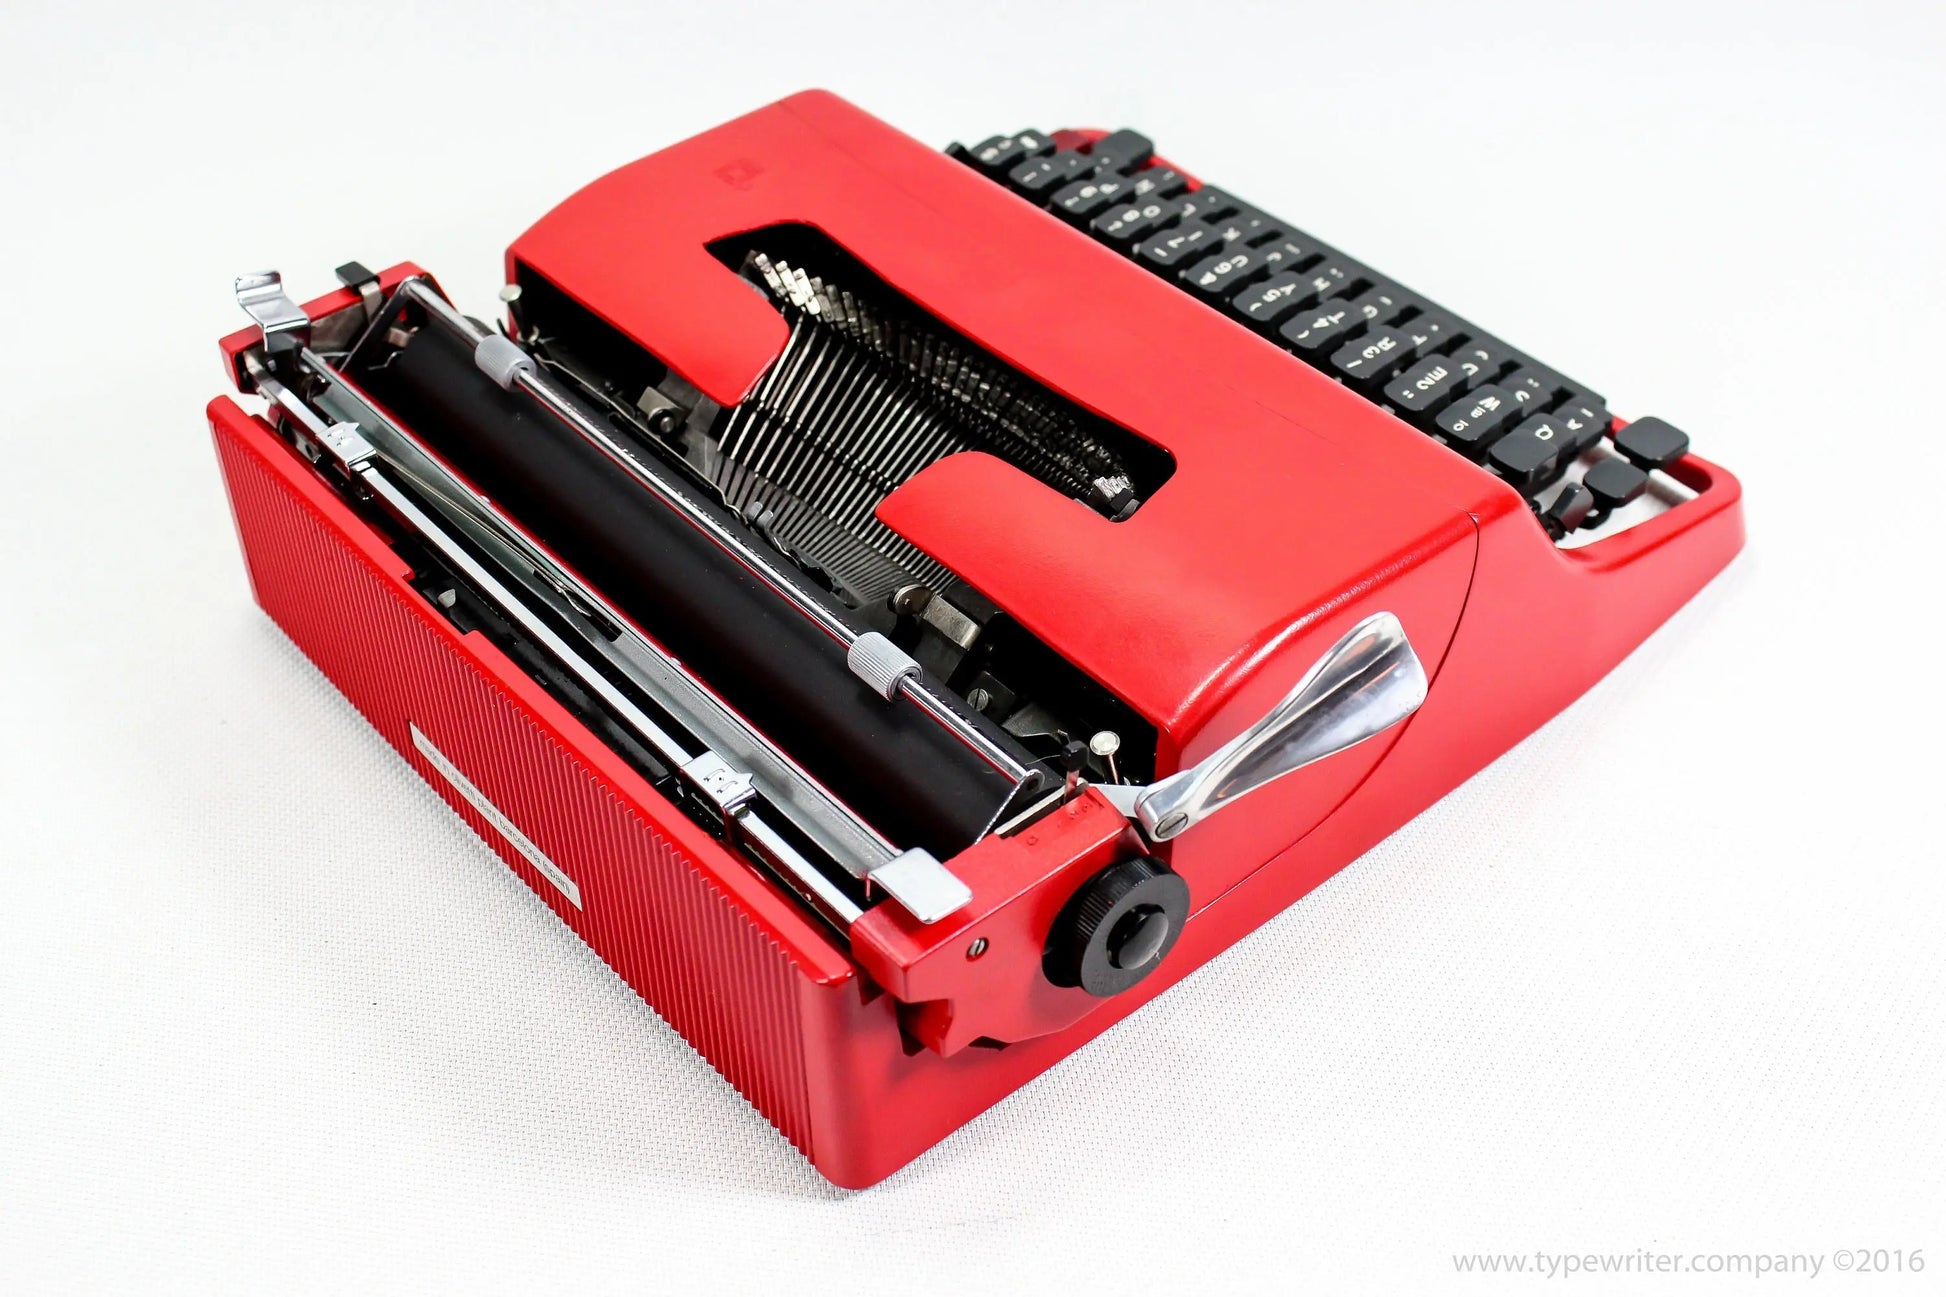 SALE! - Olivetti Lettera 32 Red Typewriter, Vintage, Professionally Serviced - ElGranero Typewriter.Company